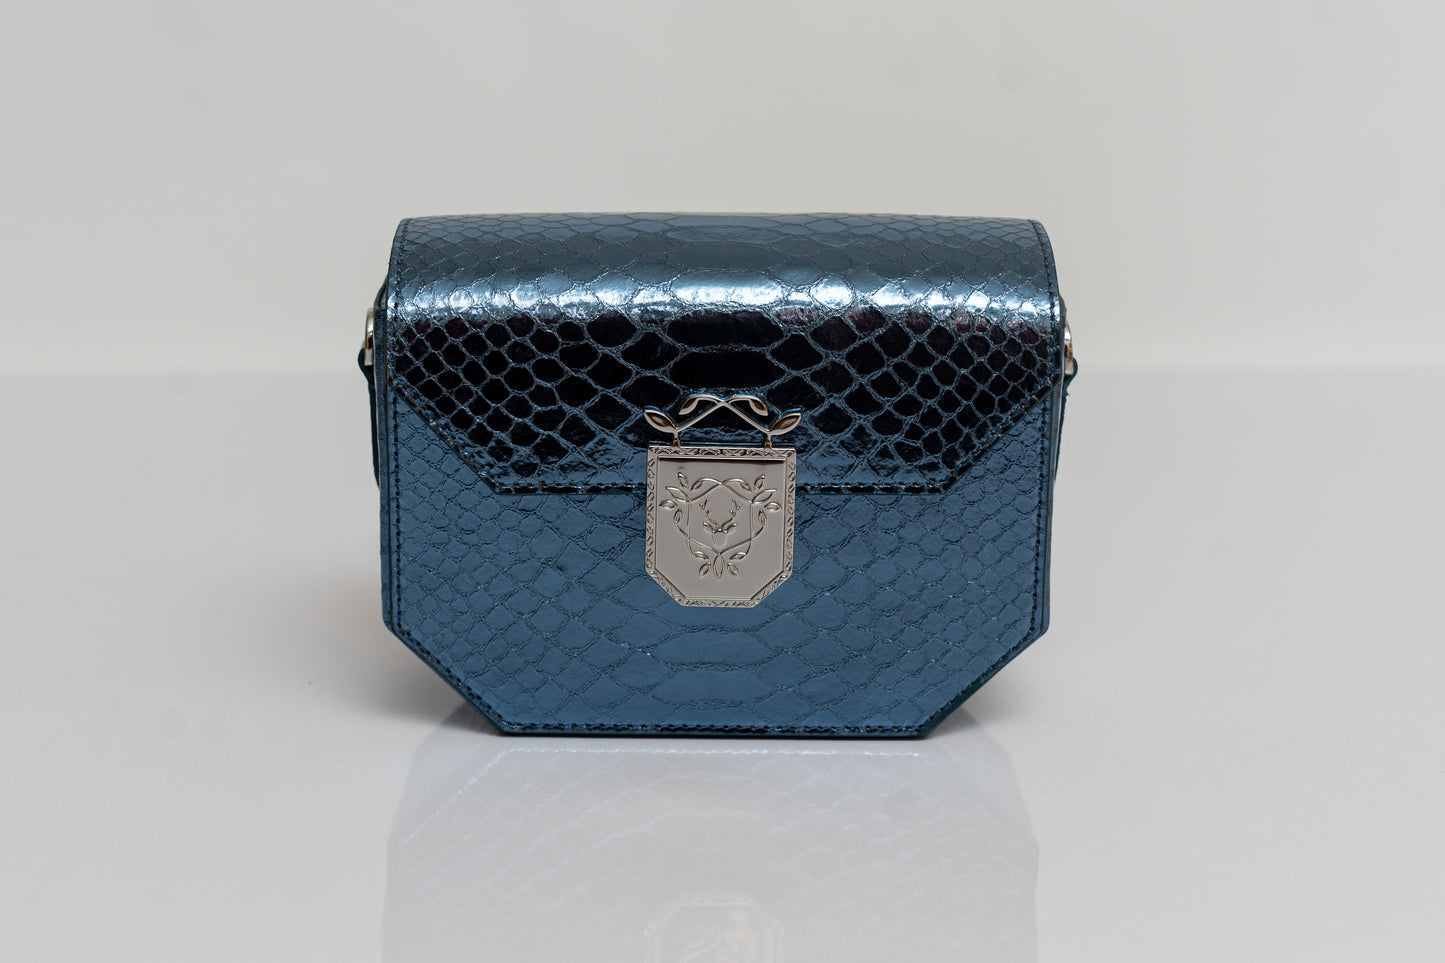 Metallic Royal Blue Belt-bag - Leather Snake pattern